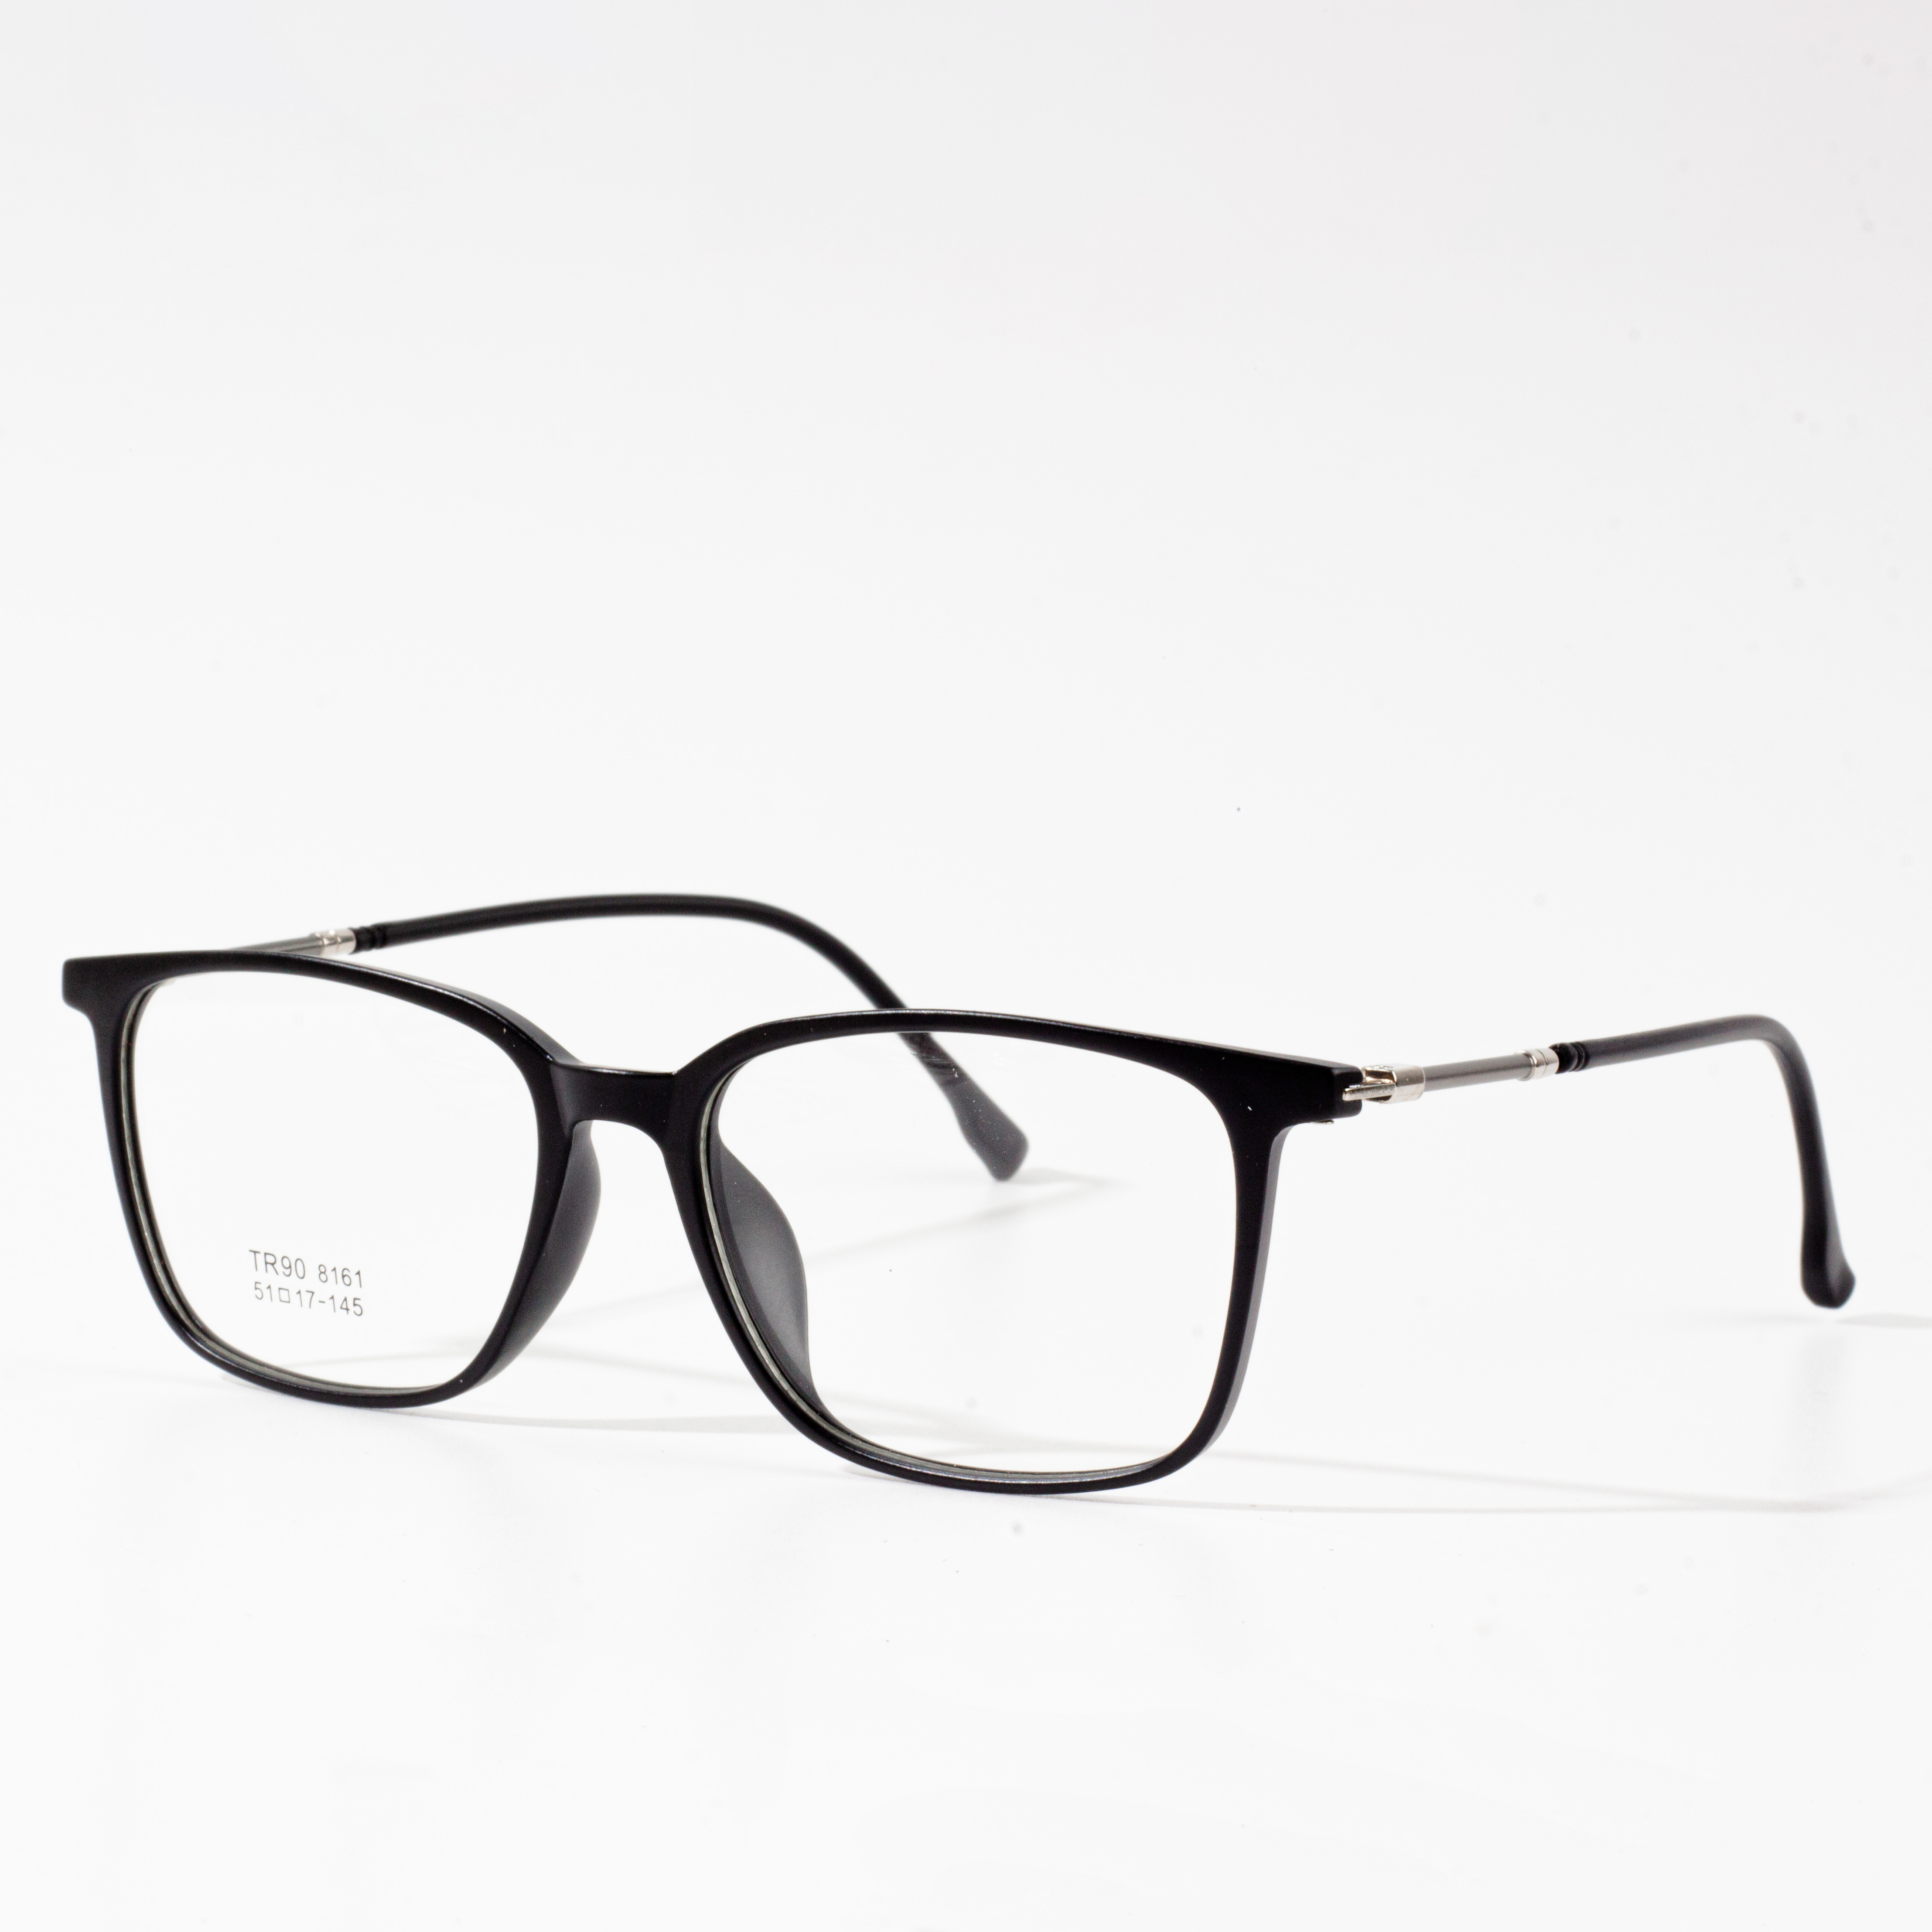 oval eyeglass frames